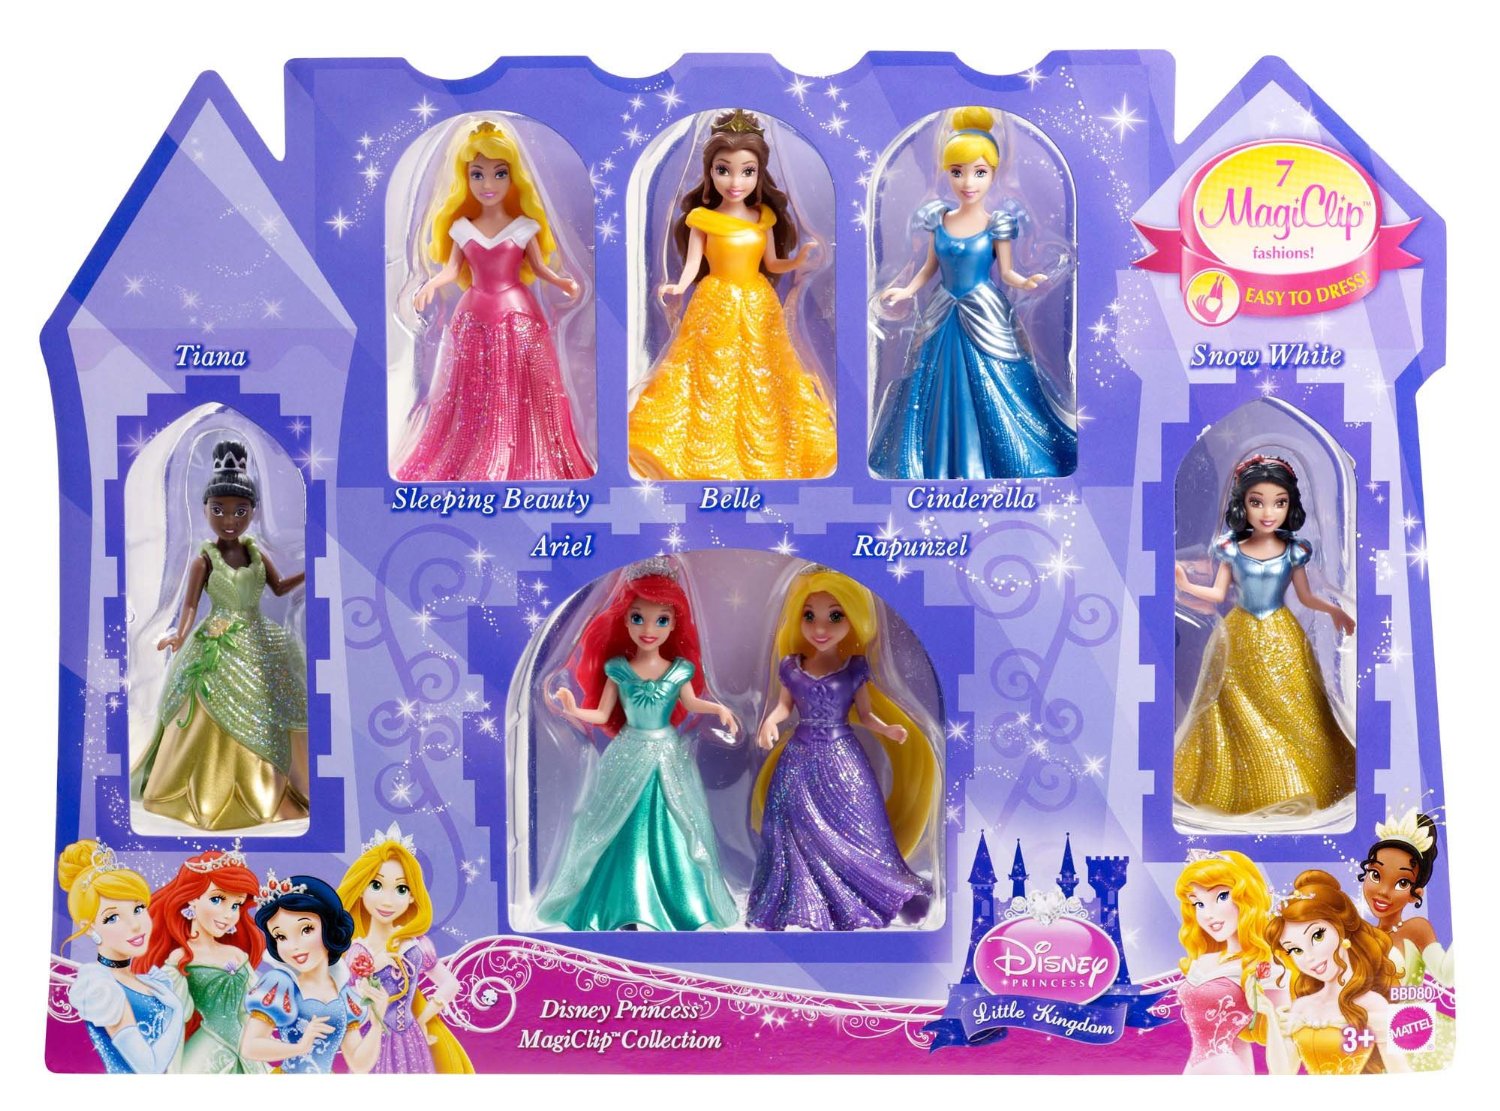 Disney Princess Little Kingdom Set review